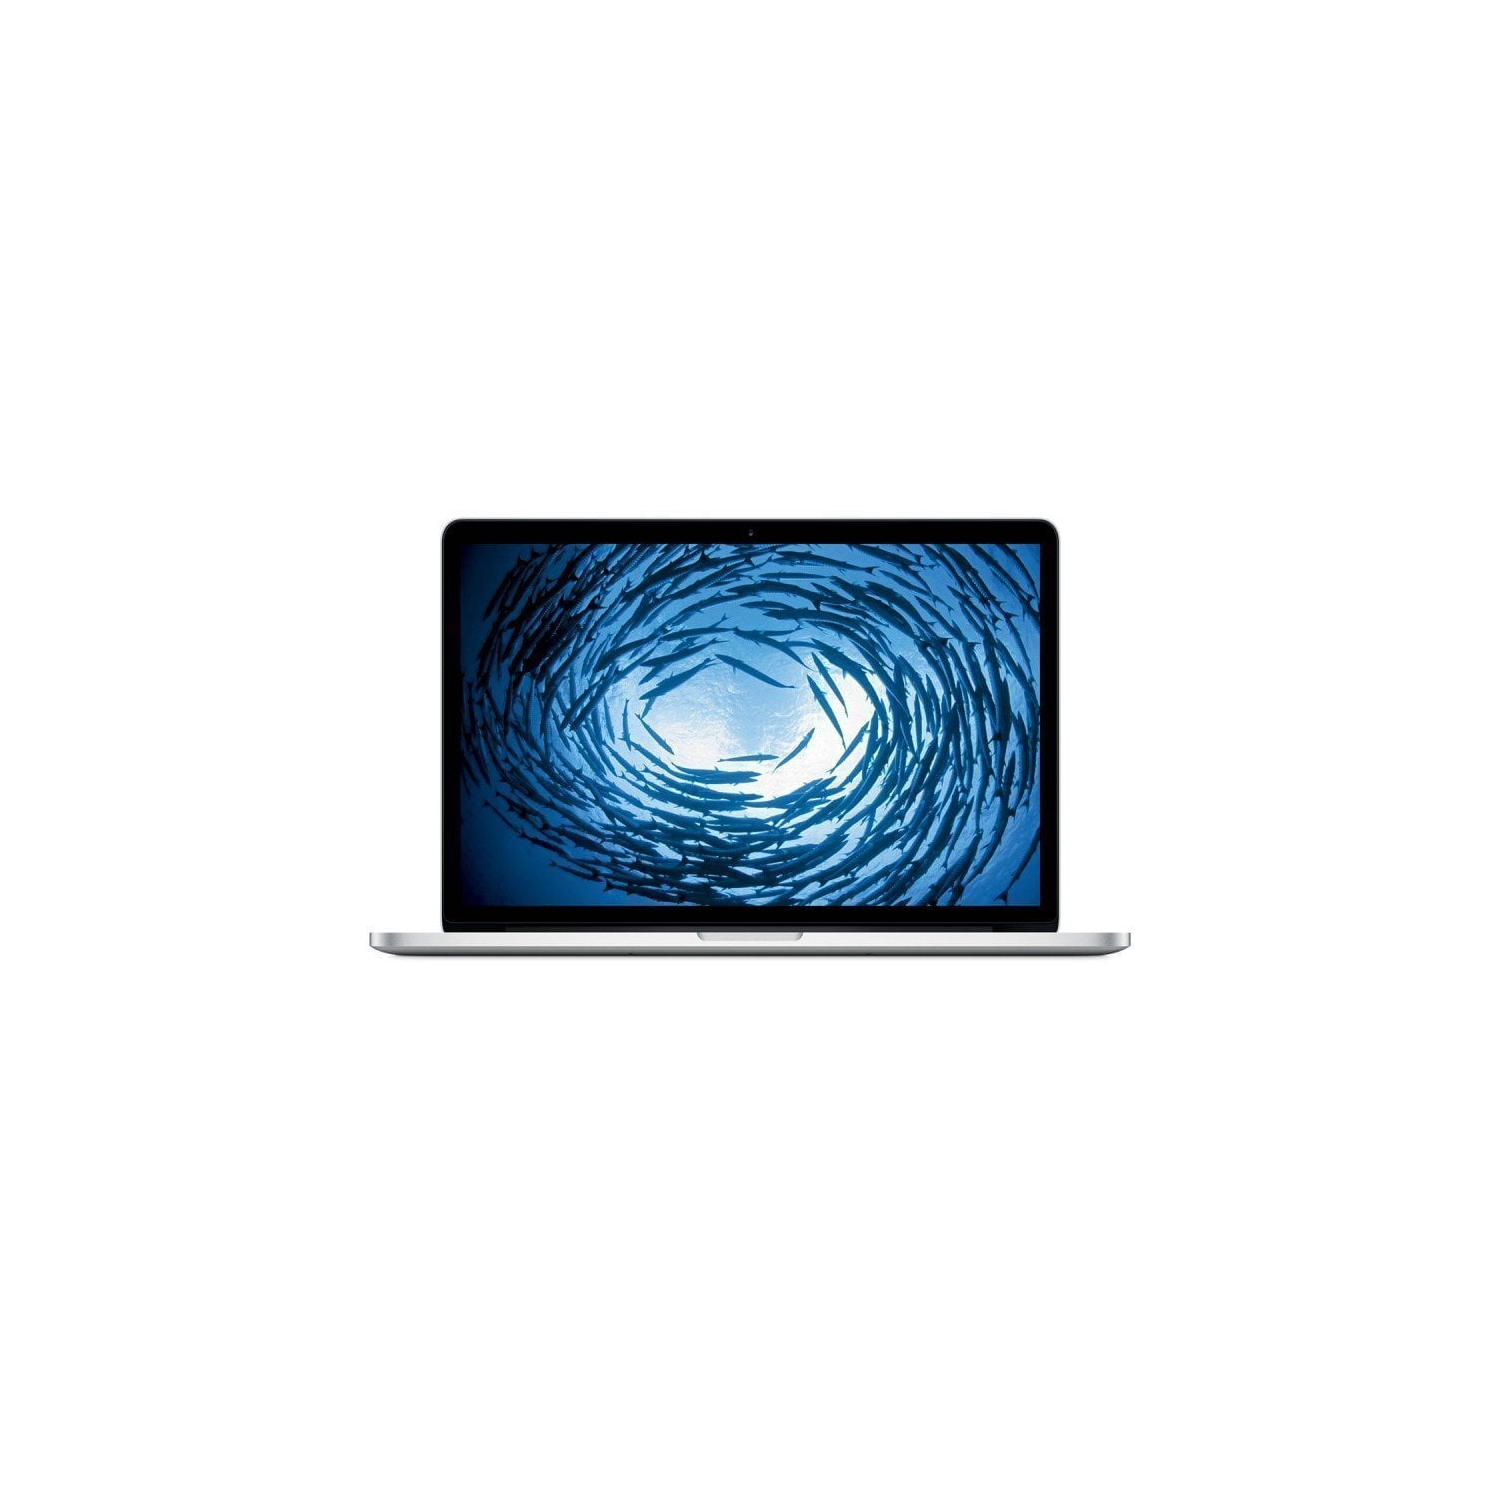 Refurbished (Good) - Apple Macbook Pro Early-2015 (Intel Core i5 CPU 8 GB RAM 500 GB SSD 13.3")